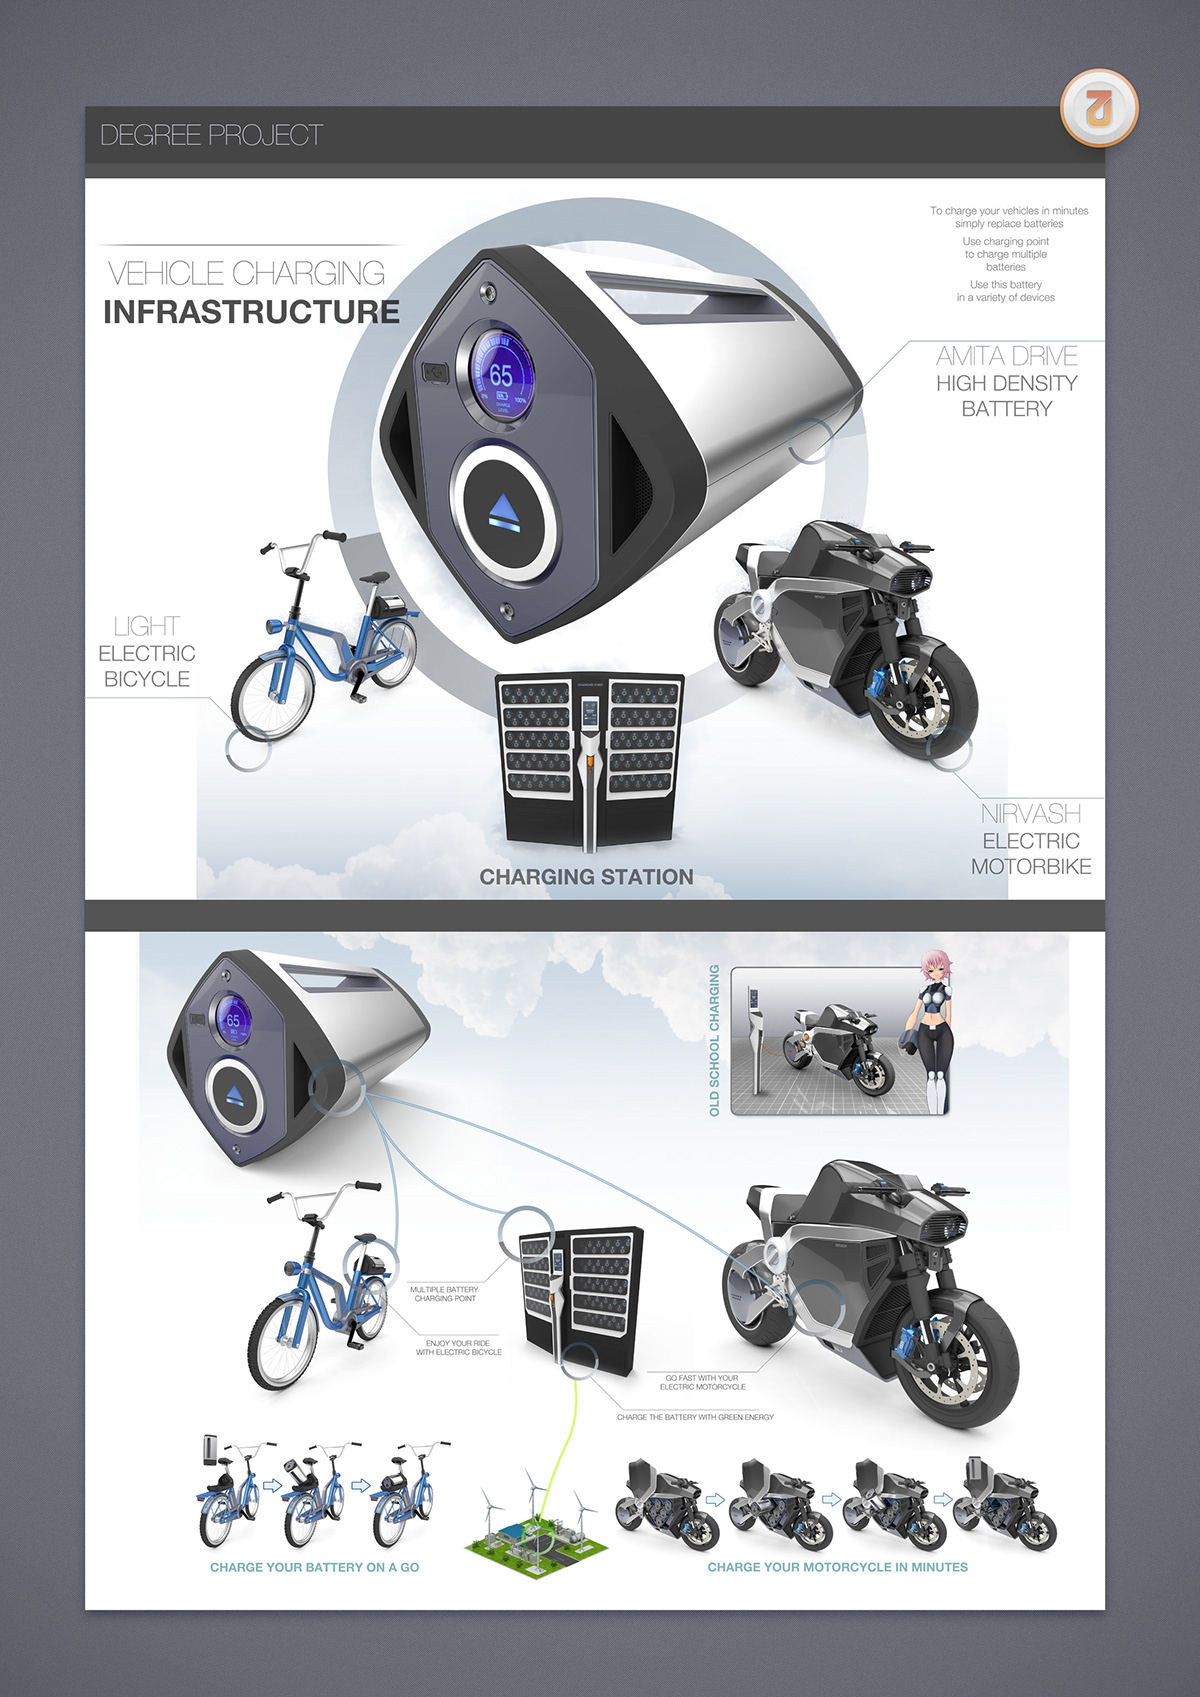 battery Amita Drive Bike electric bike motorcycle electric power Eco transport